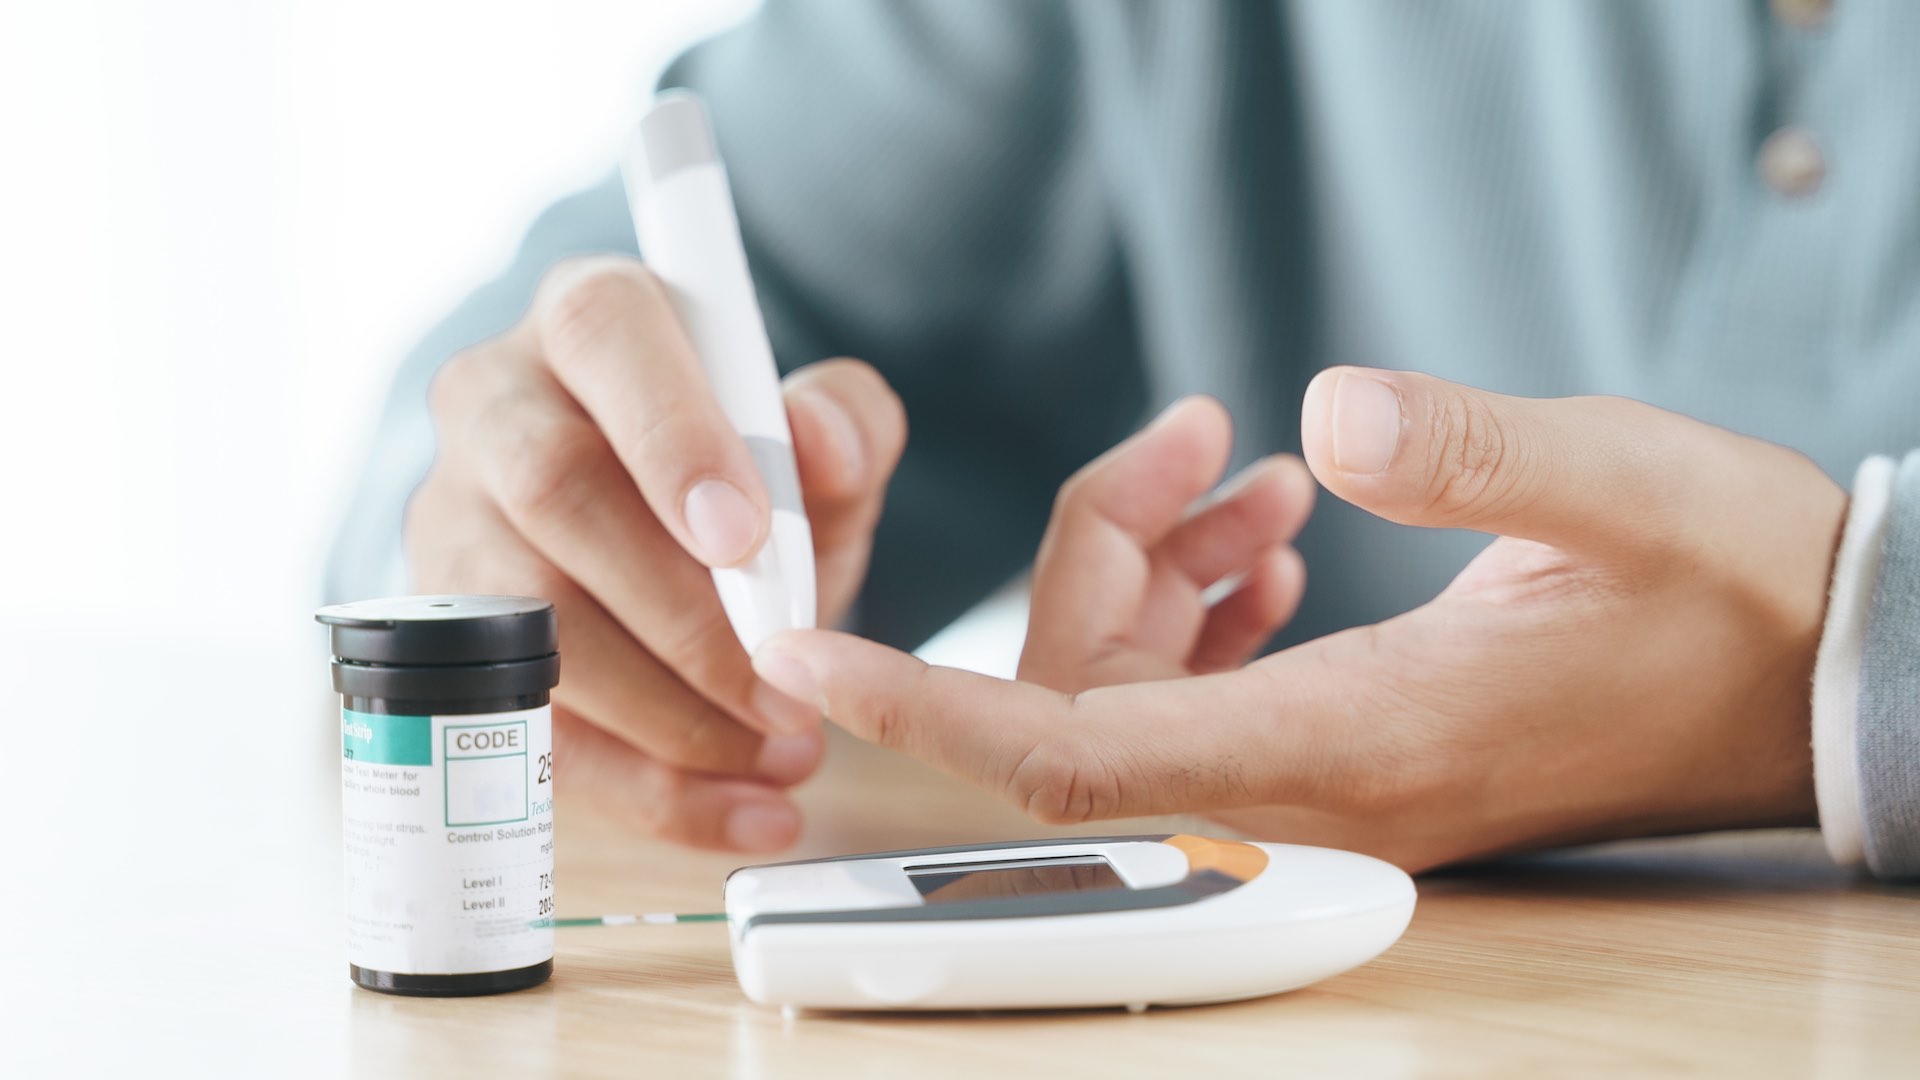 Revolutionizing diabetes care with saliva tests replacing finger pricks